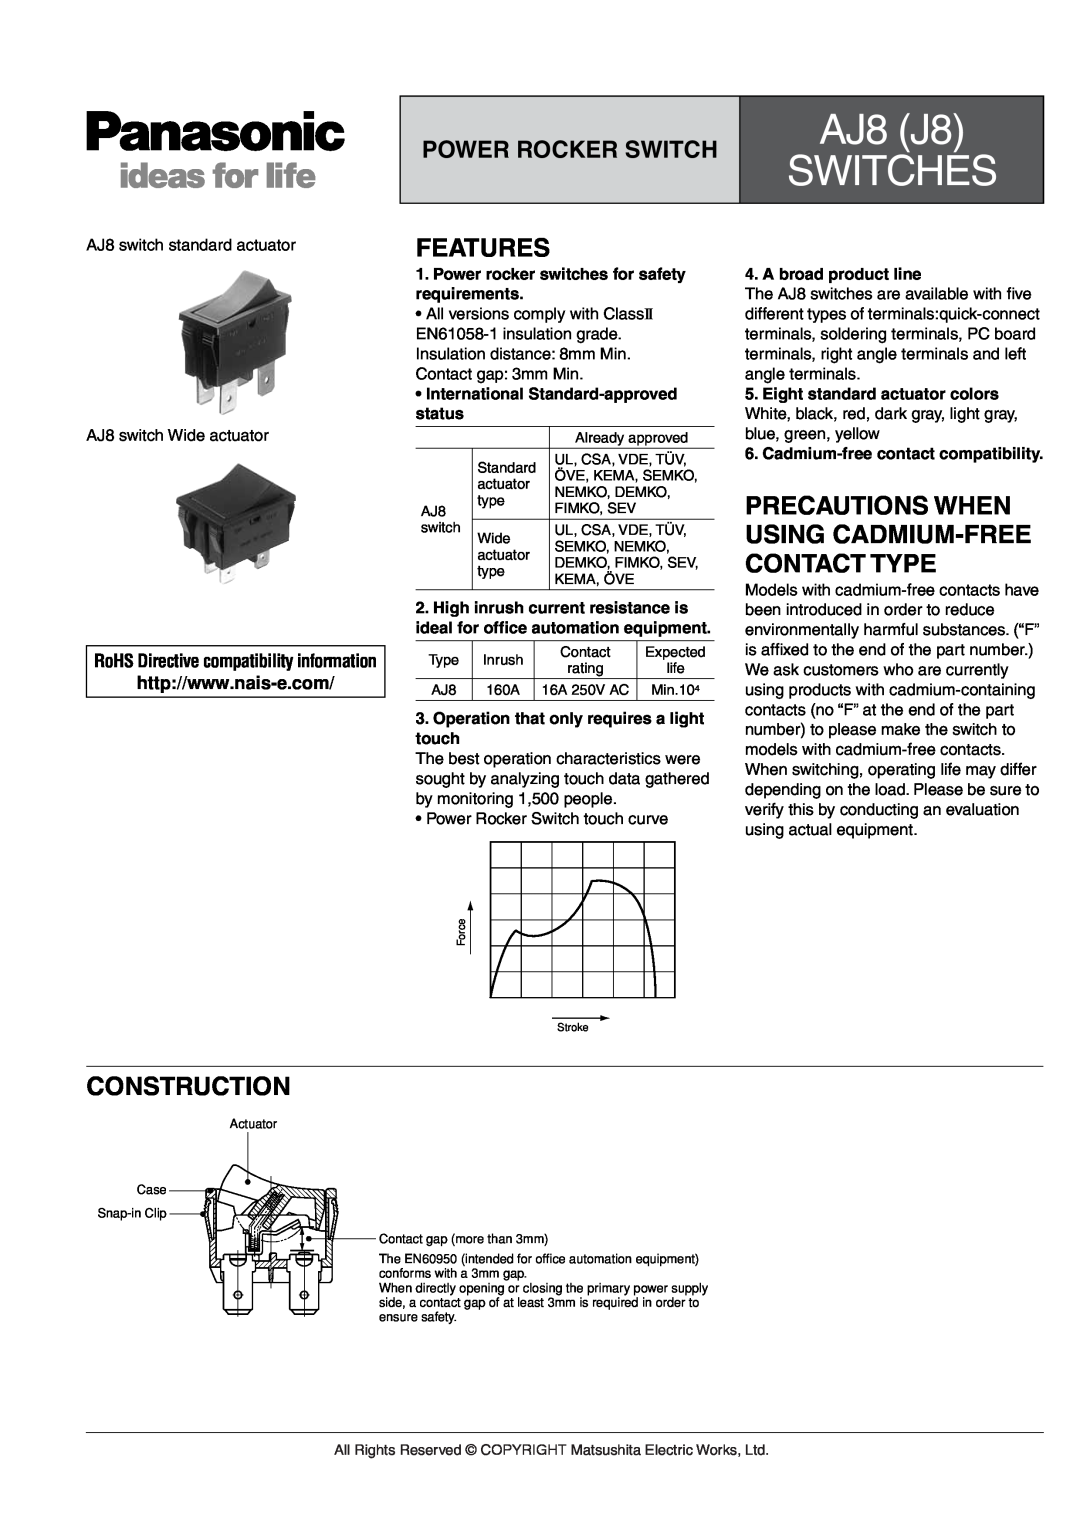 Panasonic AJ8 (J8) manual AJ8 J8, Features, Precautions When Using Cadmium-Free Contact Type, Construction, Switches 